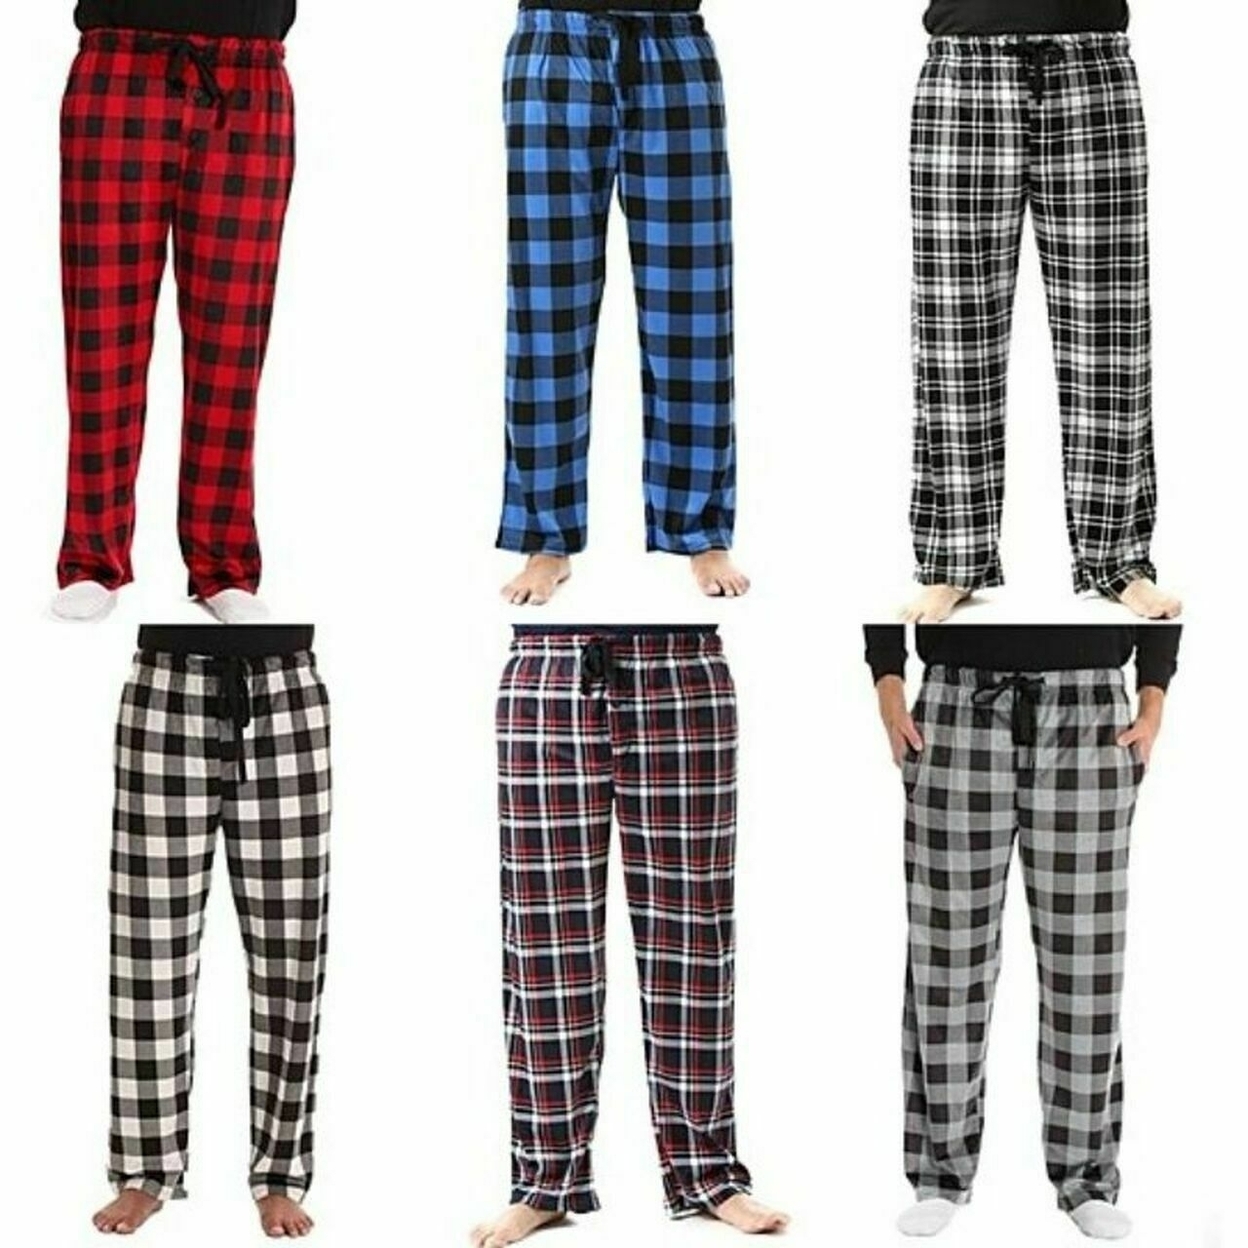 Multi-Pack: Men's Ultra Soft Cozy Flannel Fleece Plaid Pajama Sleep Bottom Lounge Pants - 3-pack, Small